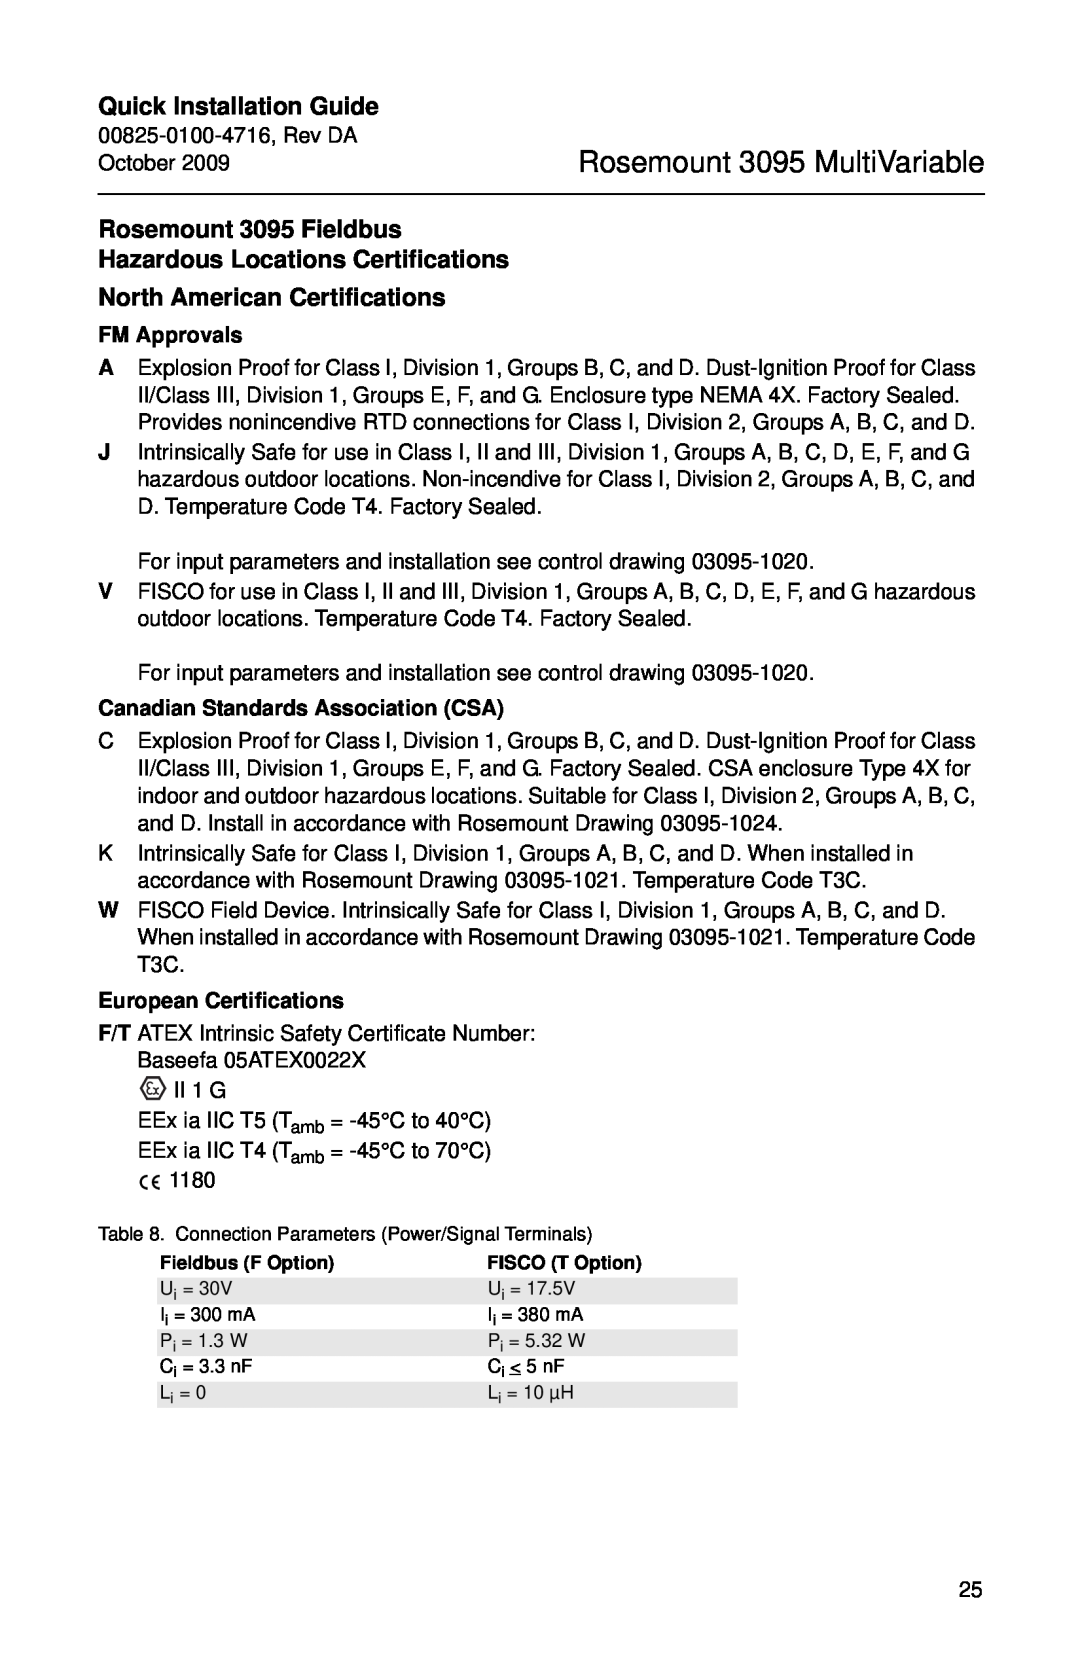 Emerson 00825-0100-4716 manual Rosemount 3095 Fieldbus Hazardous Locations Certifications, North American Certifications 